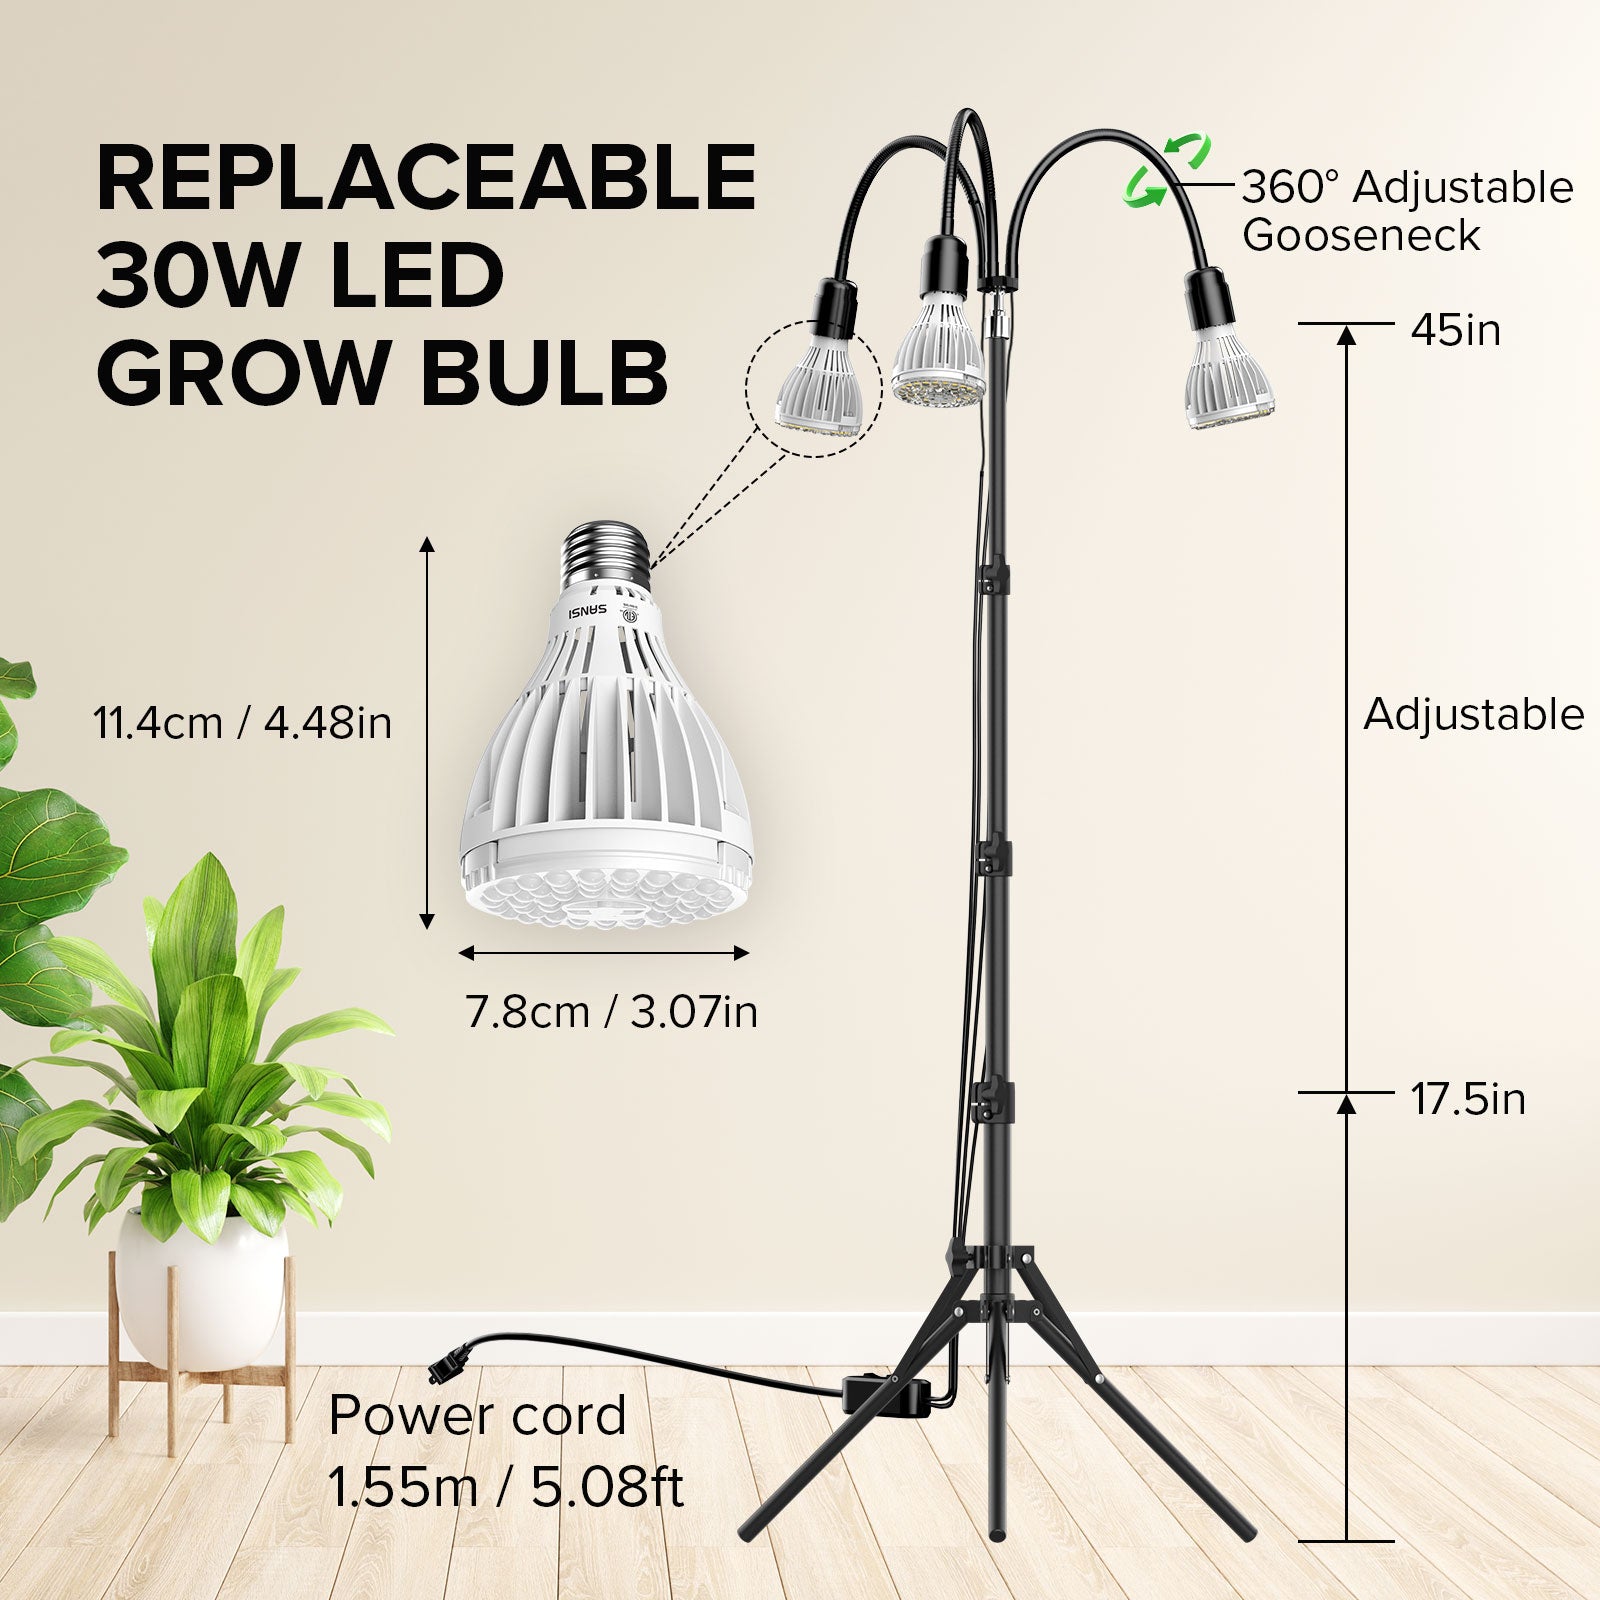 Grow Light with Adjustable Tripod Stand, replaceable 30W led grow bulb, 360° adjustable gooseneck